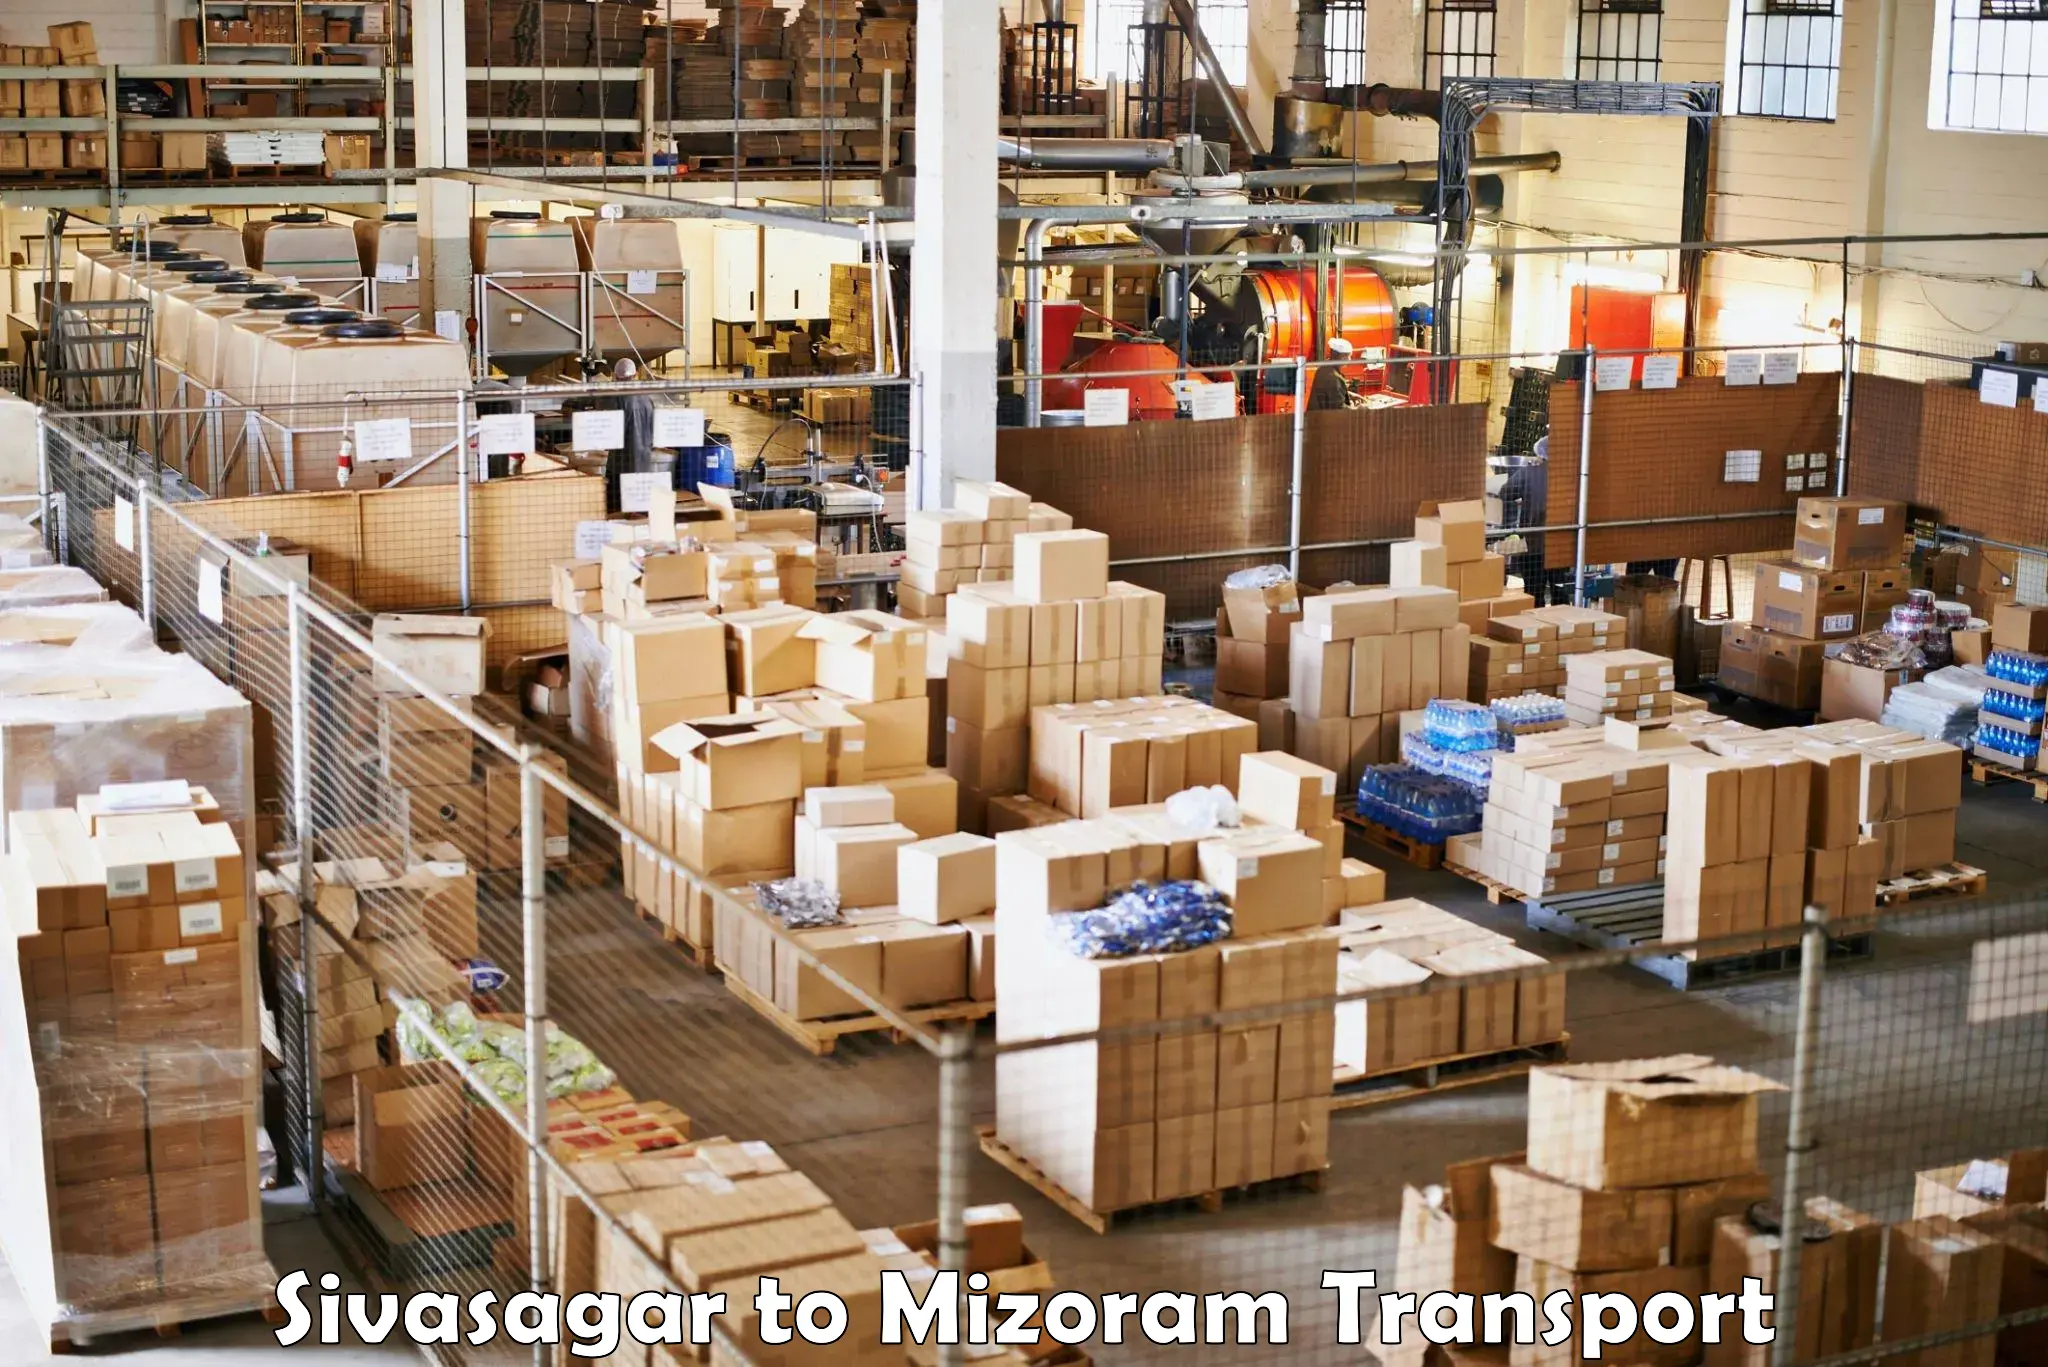 Container transport service Sivasagar to Siaha